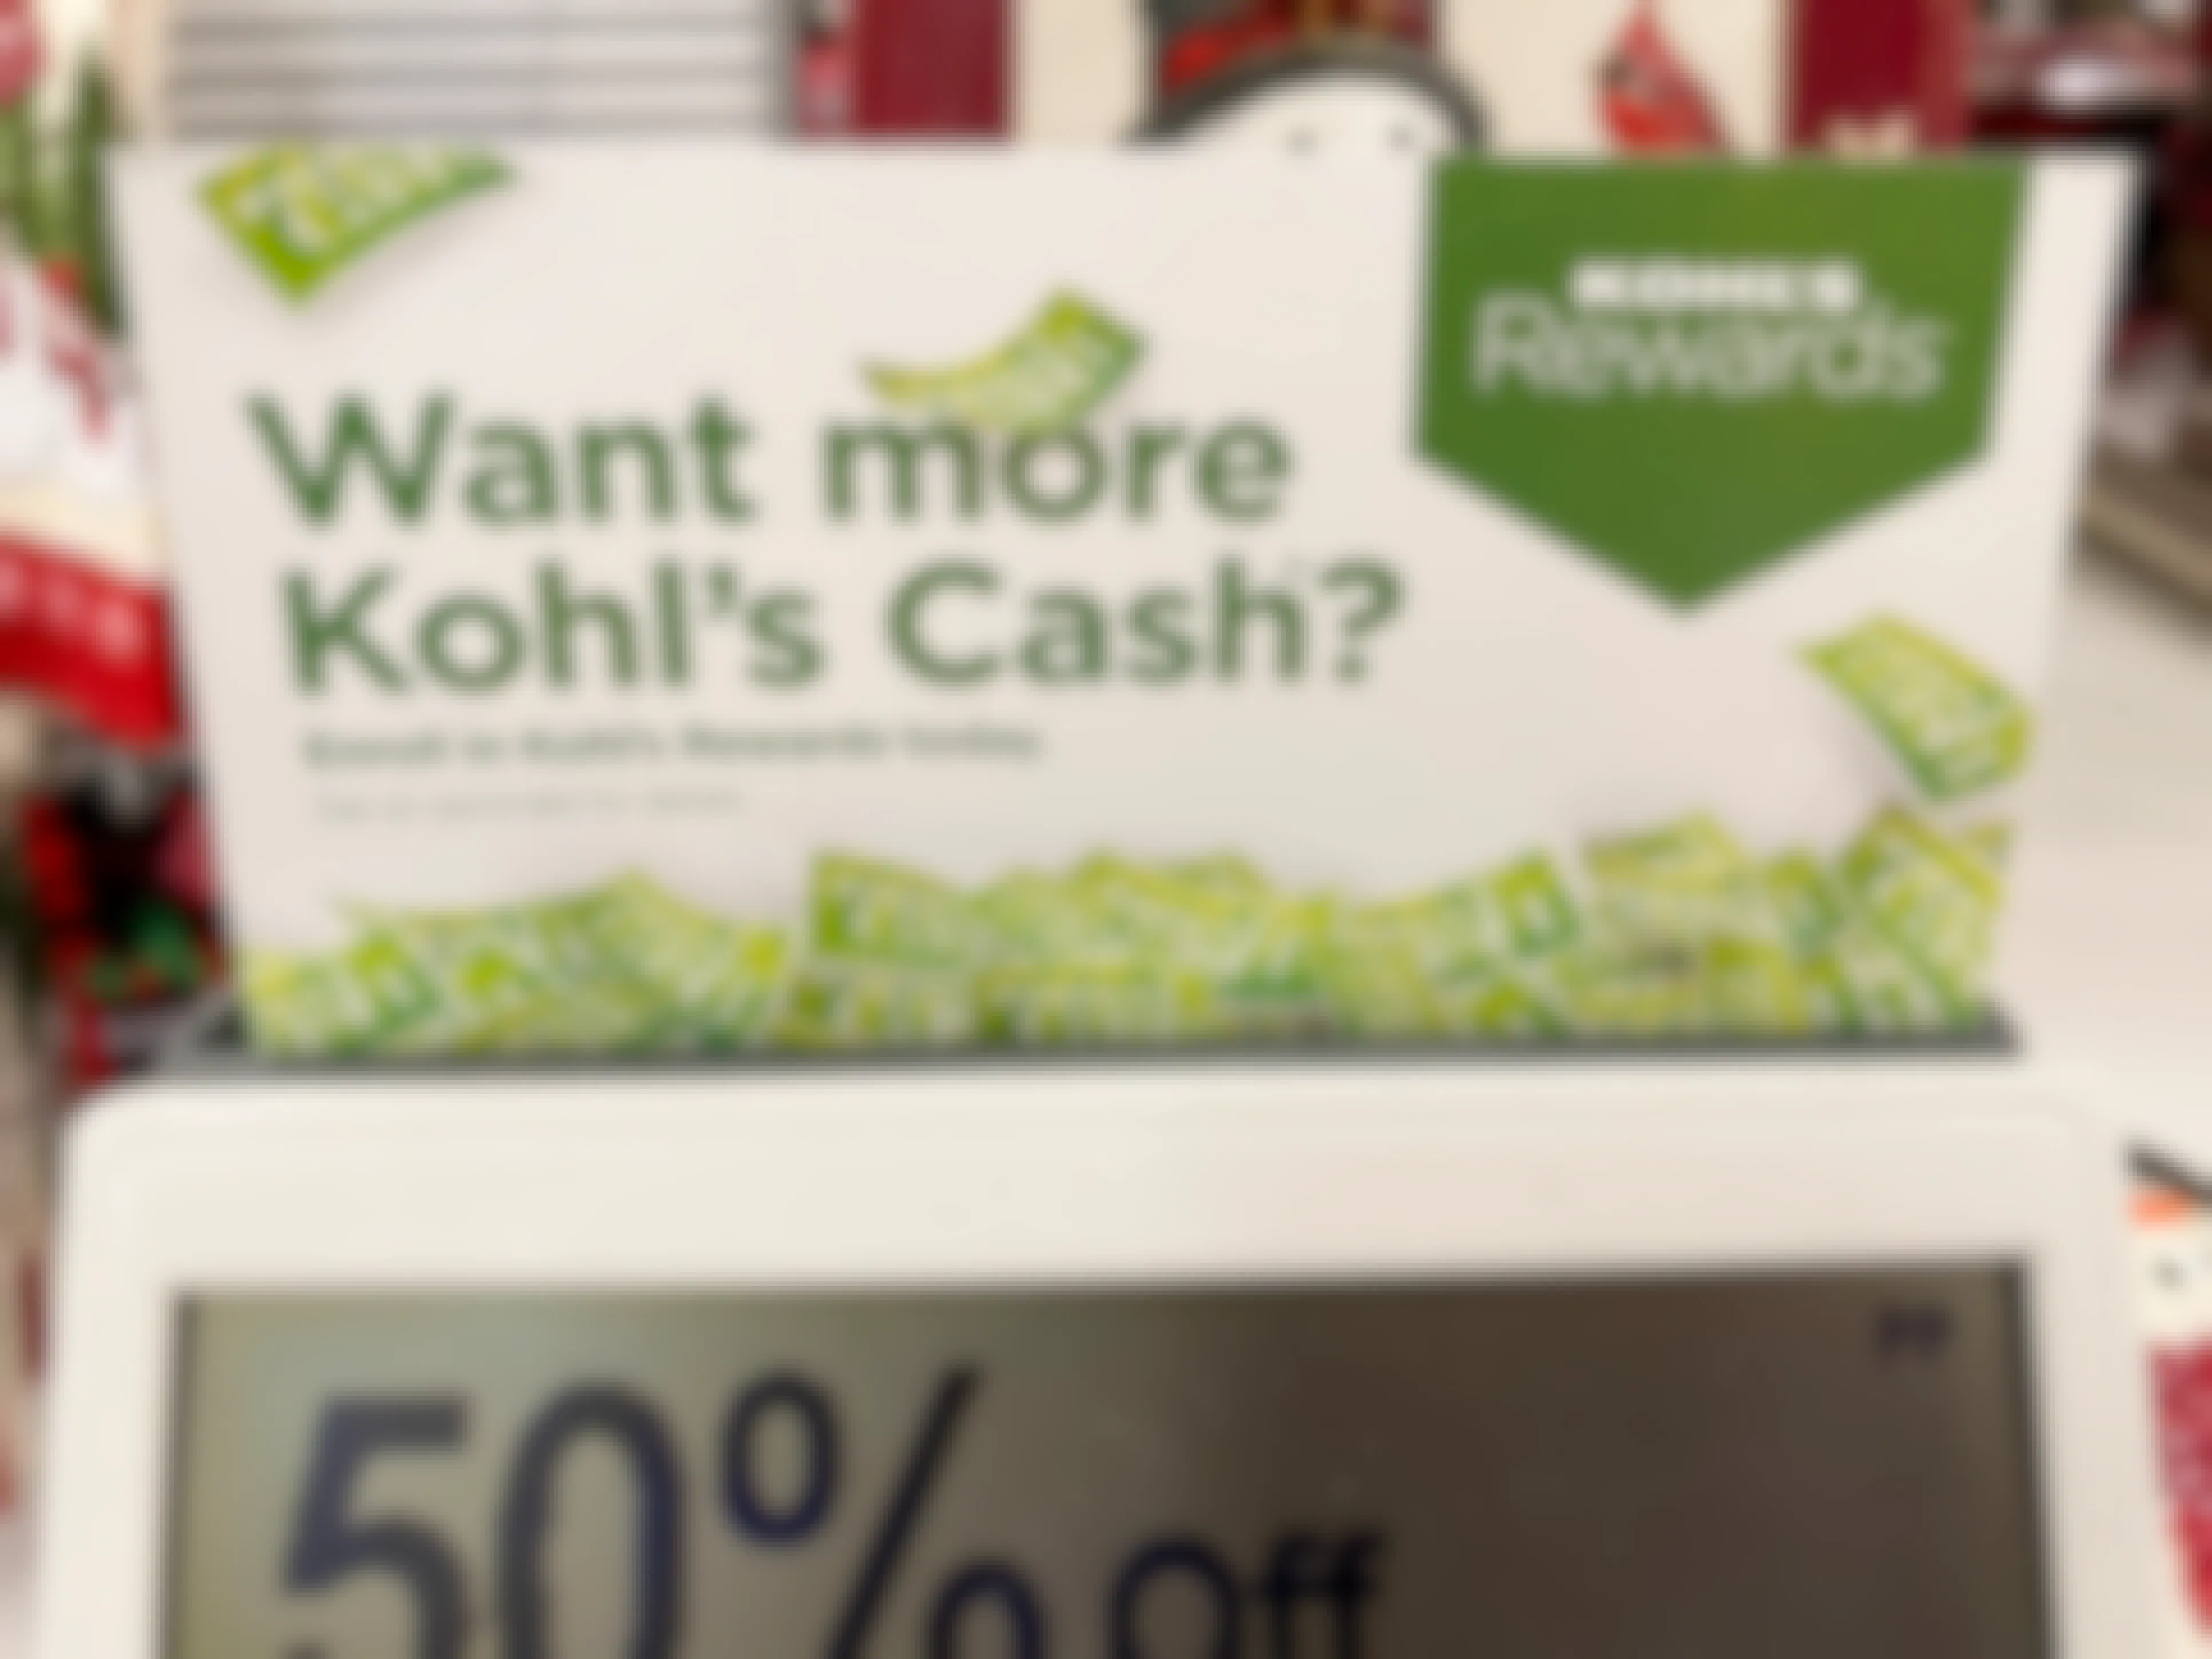 A Kohl's cash sign at Kohl's